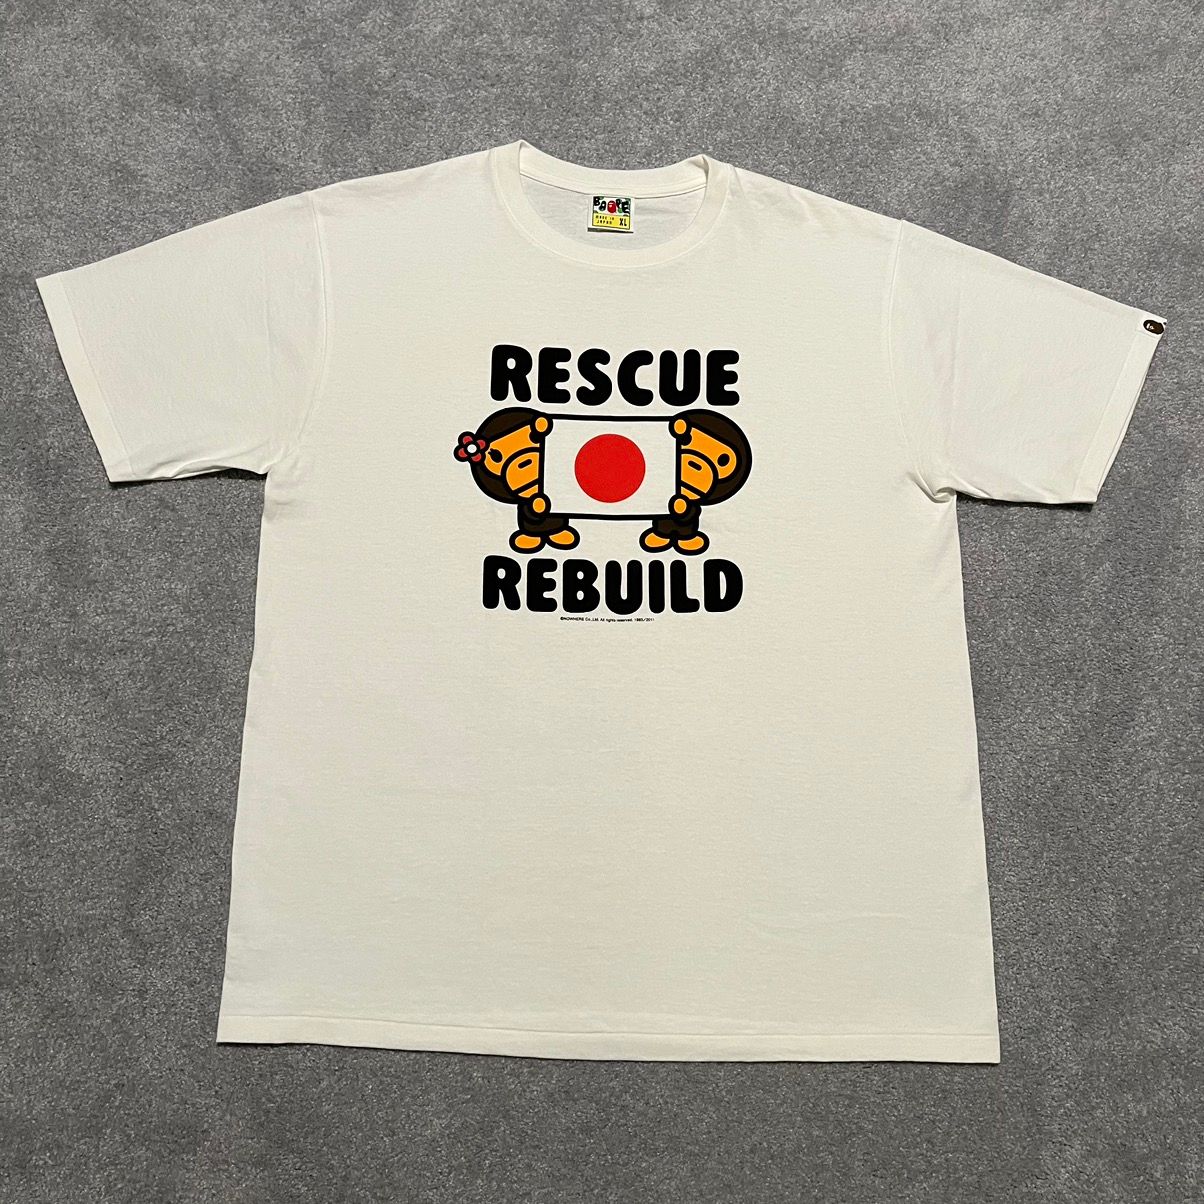 Pre-owned Bape X Nigo A Bathing Ape Bape Japan Rescue Rebuild Flag Flood Tee Shirt In White Red Black